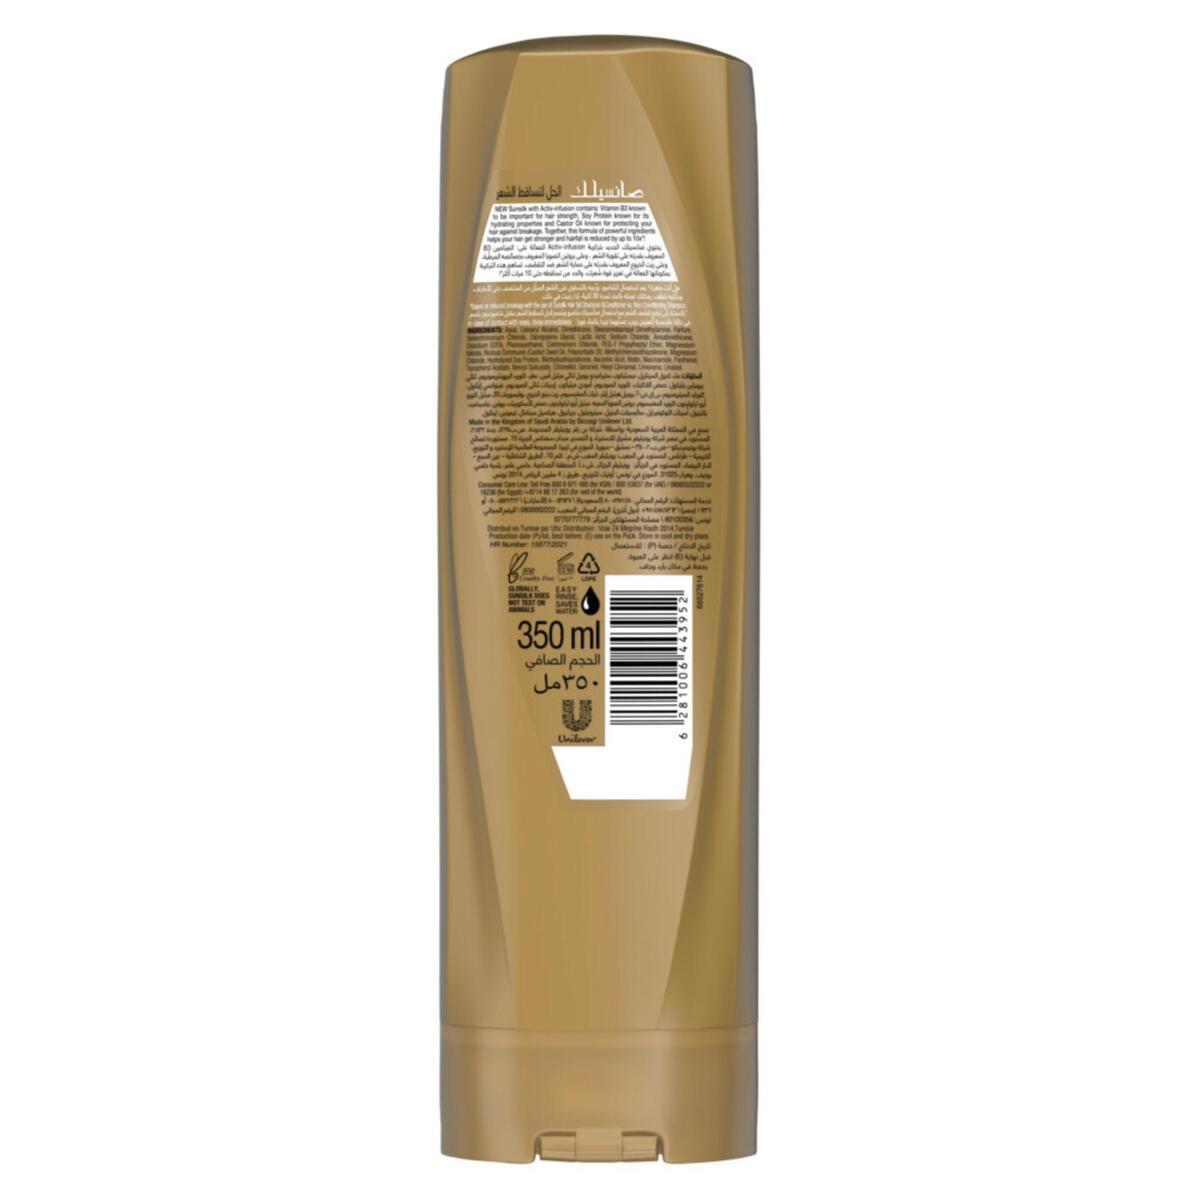 Sunsilk Hair Fall Solution Conditioner 350 ml